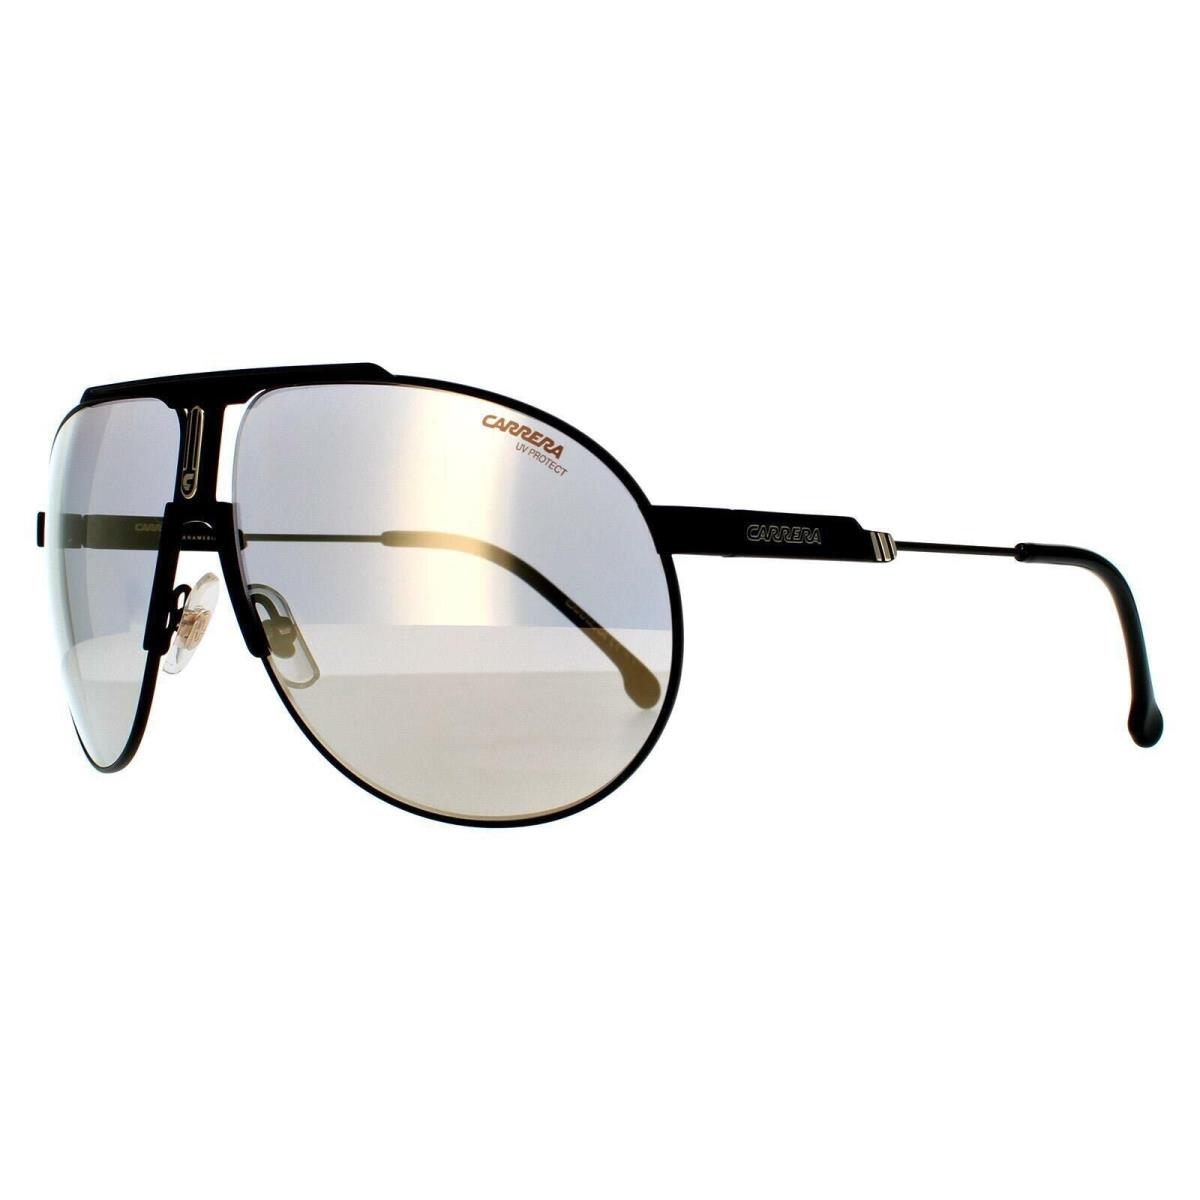 Carrera Sunglasses Panamerika65 003 JO Matte Black Gray Bronze Mirror - Black, Frame: Black, Lens: Gray